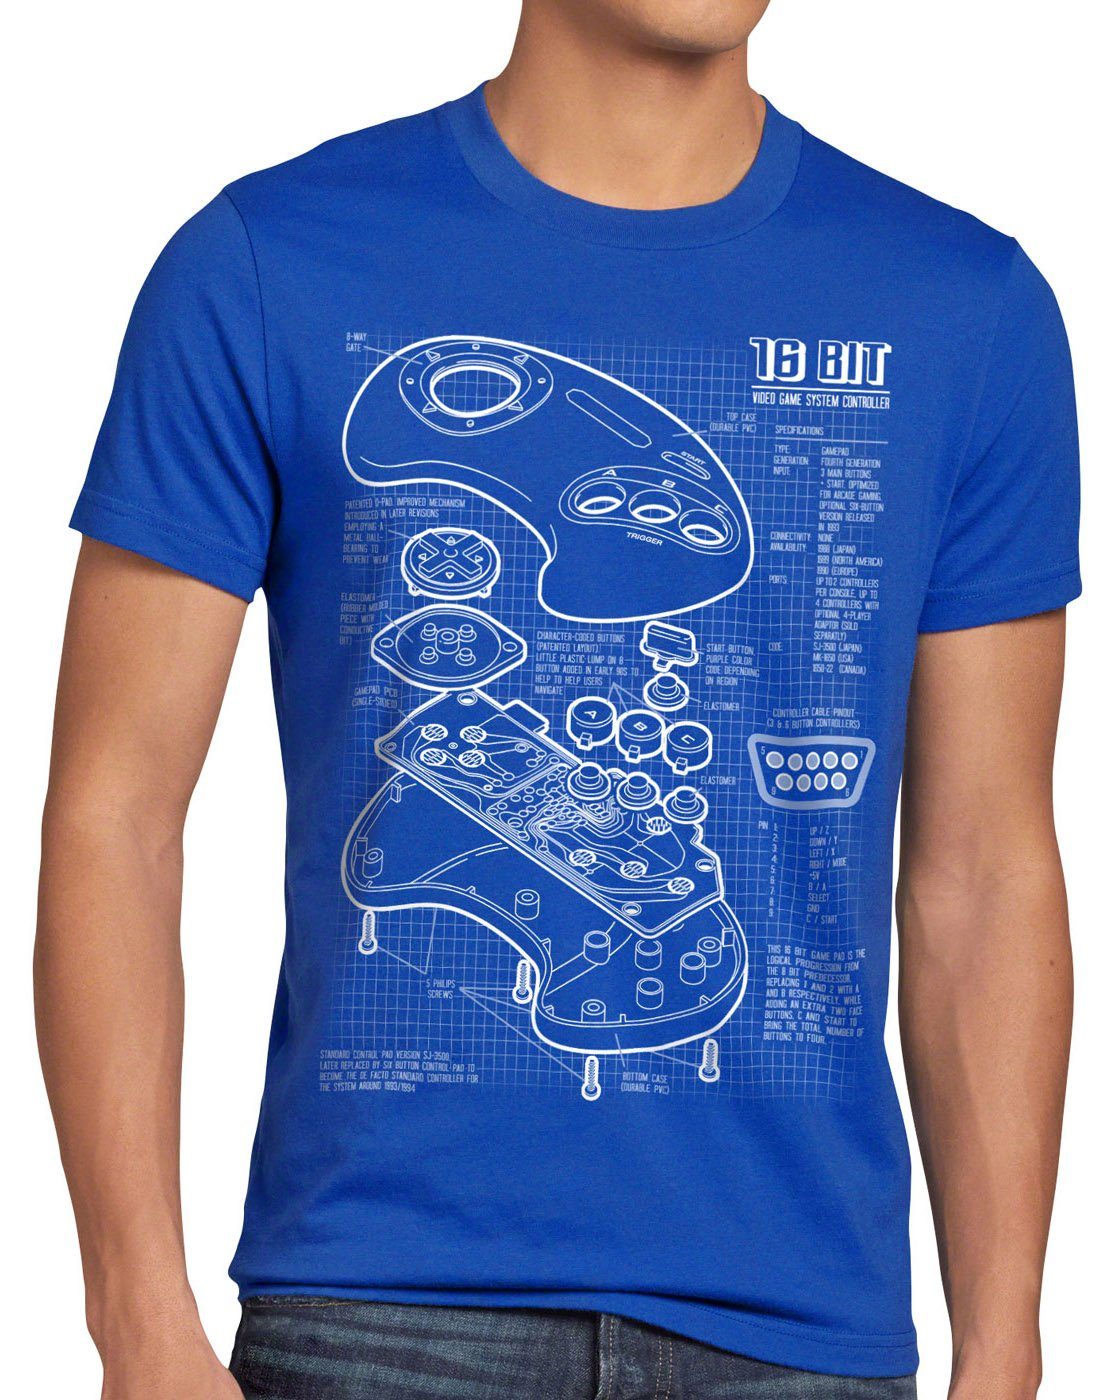 style3 Print-Shirt Herren T-Shirt drive master Konsole blau md classic genesis 16-Bit gamer Mega system